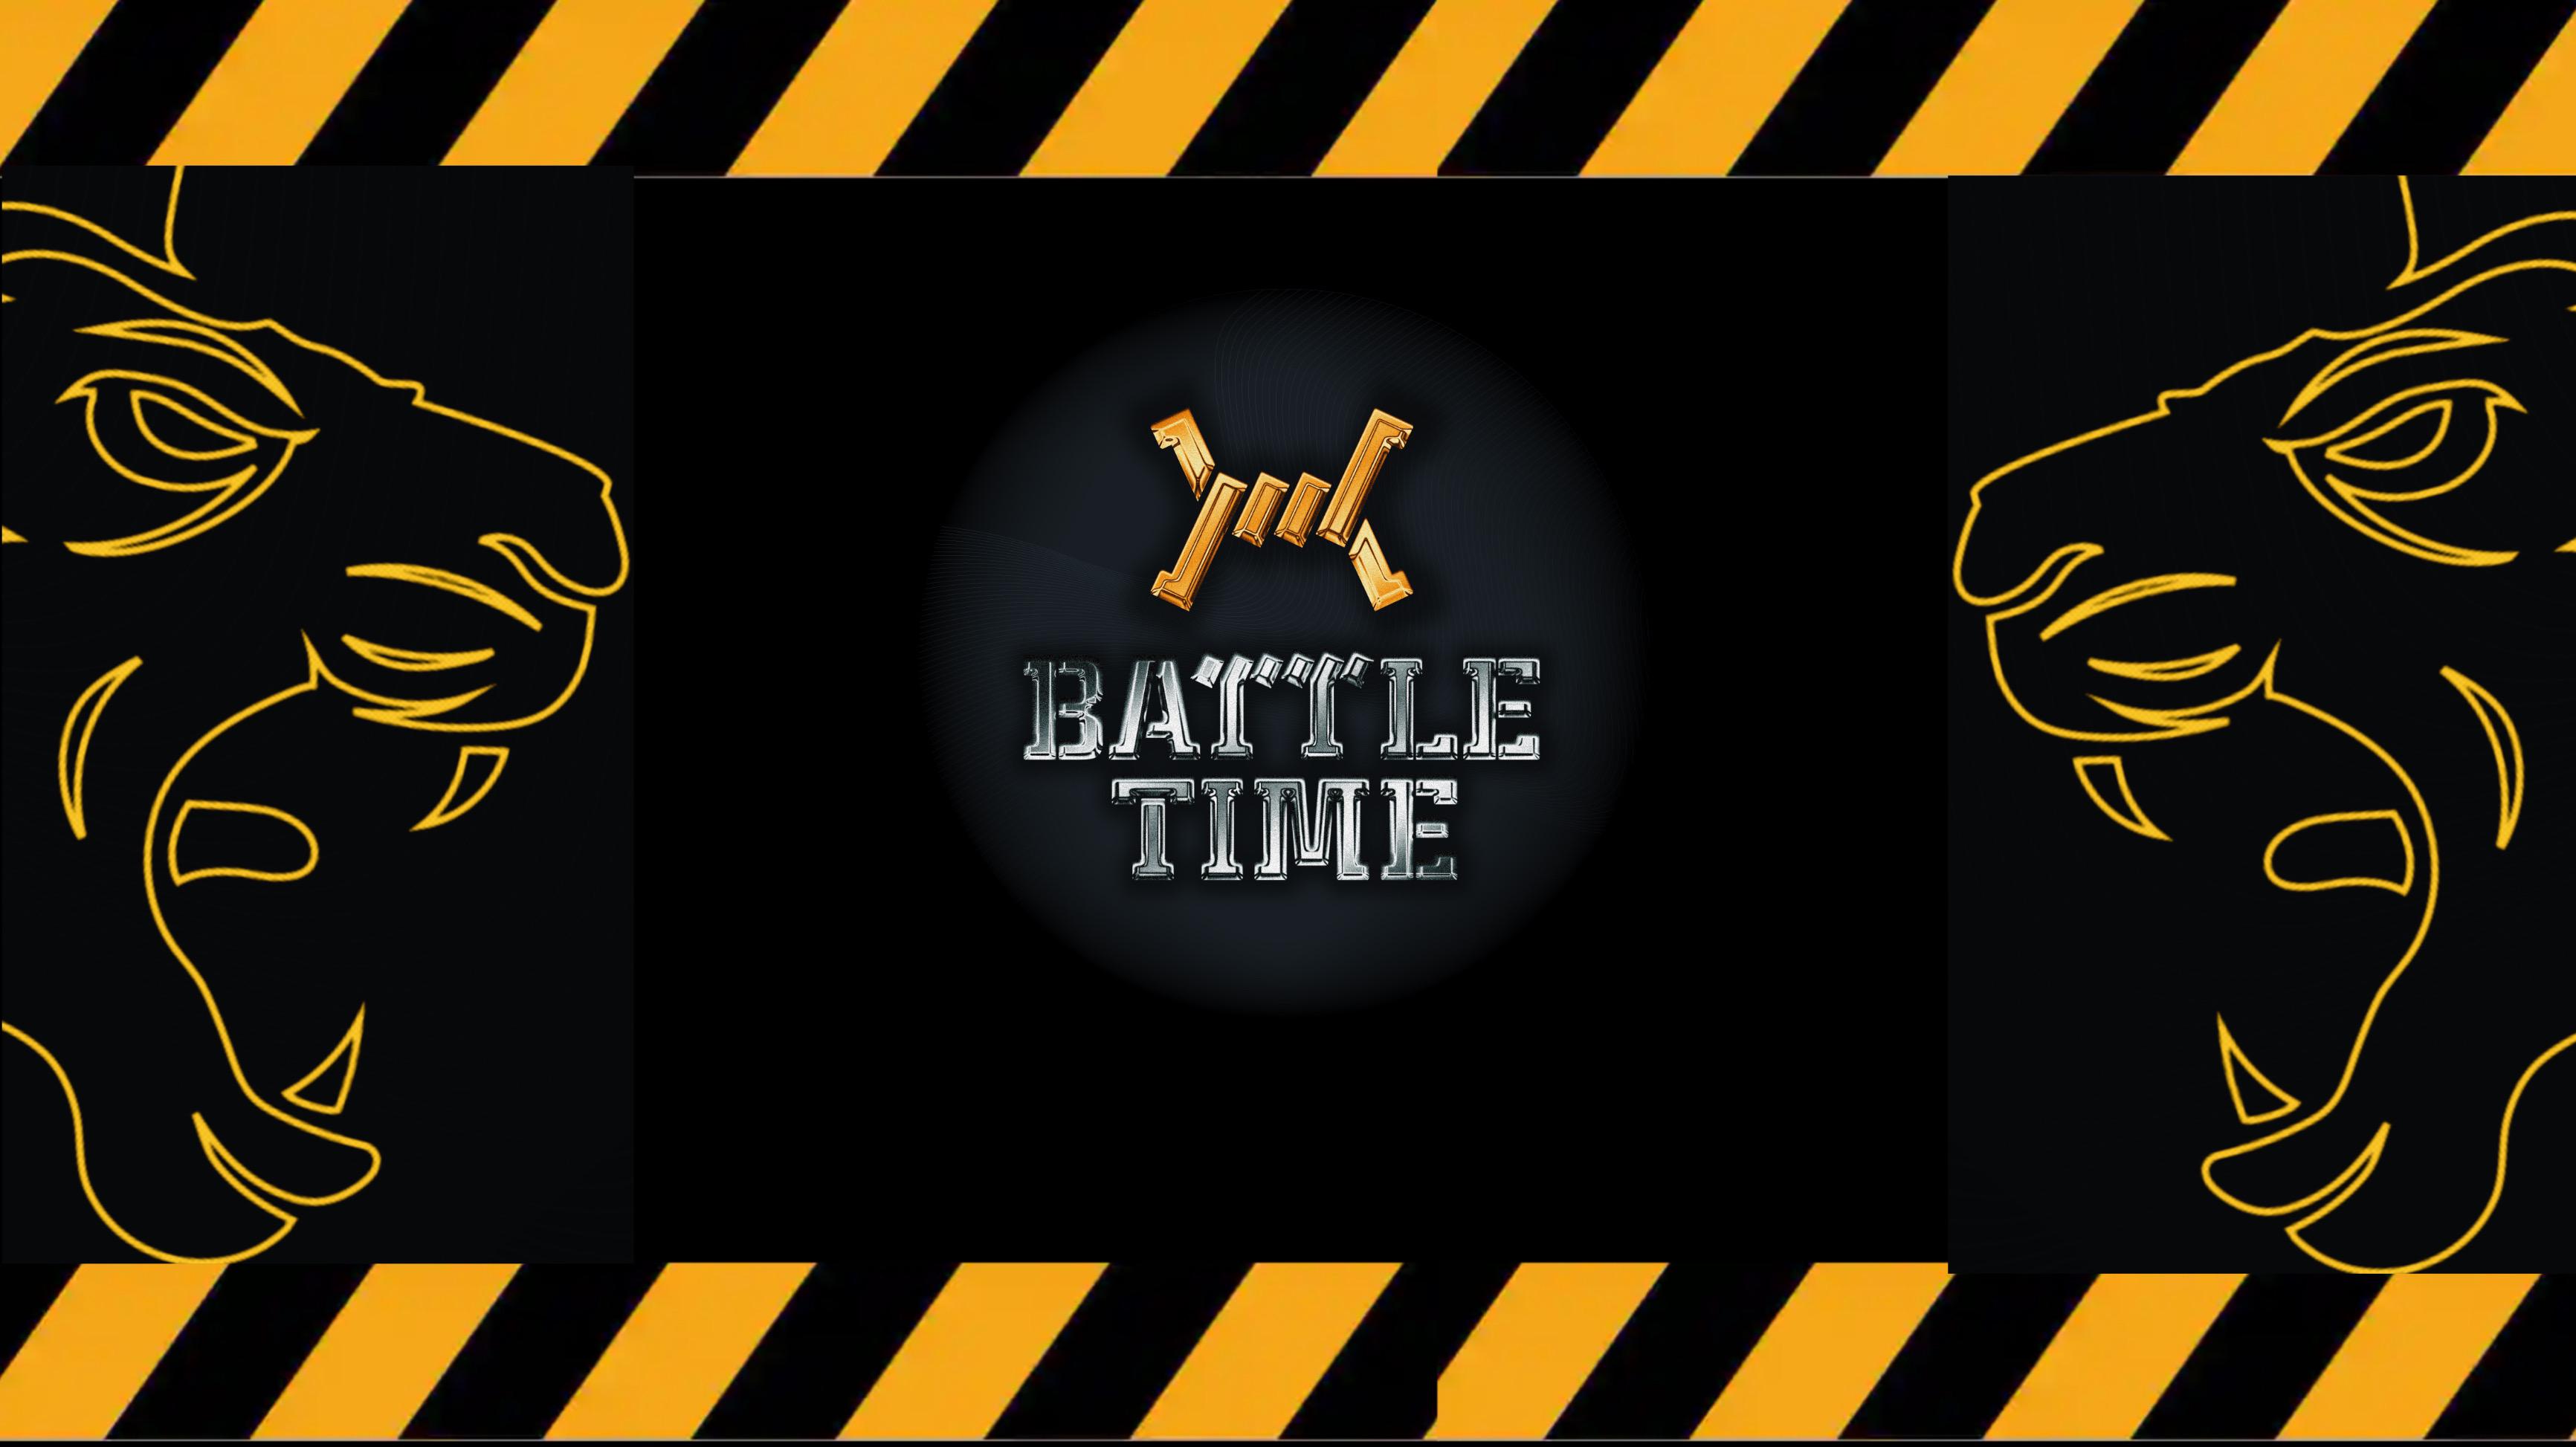 BattleTime MMA Event